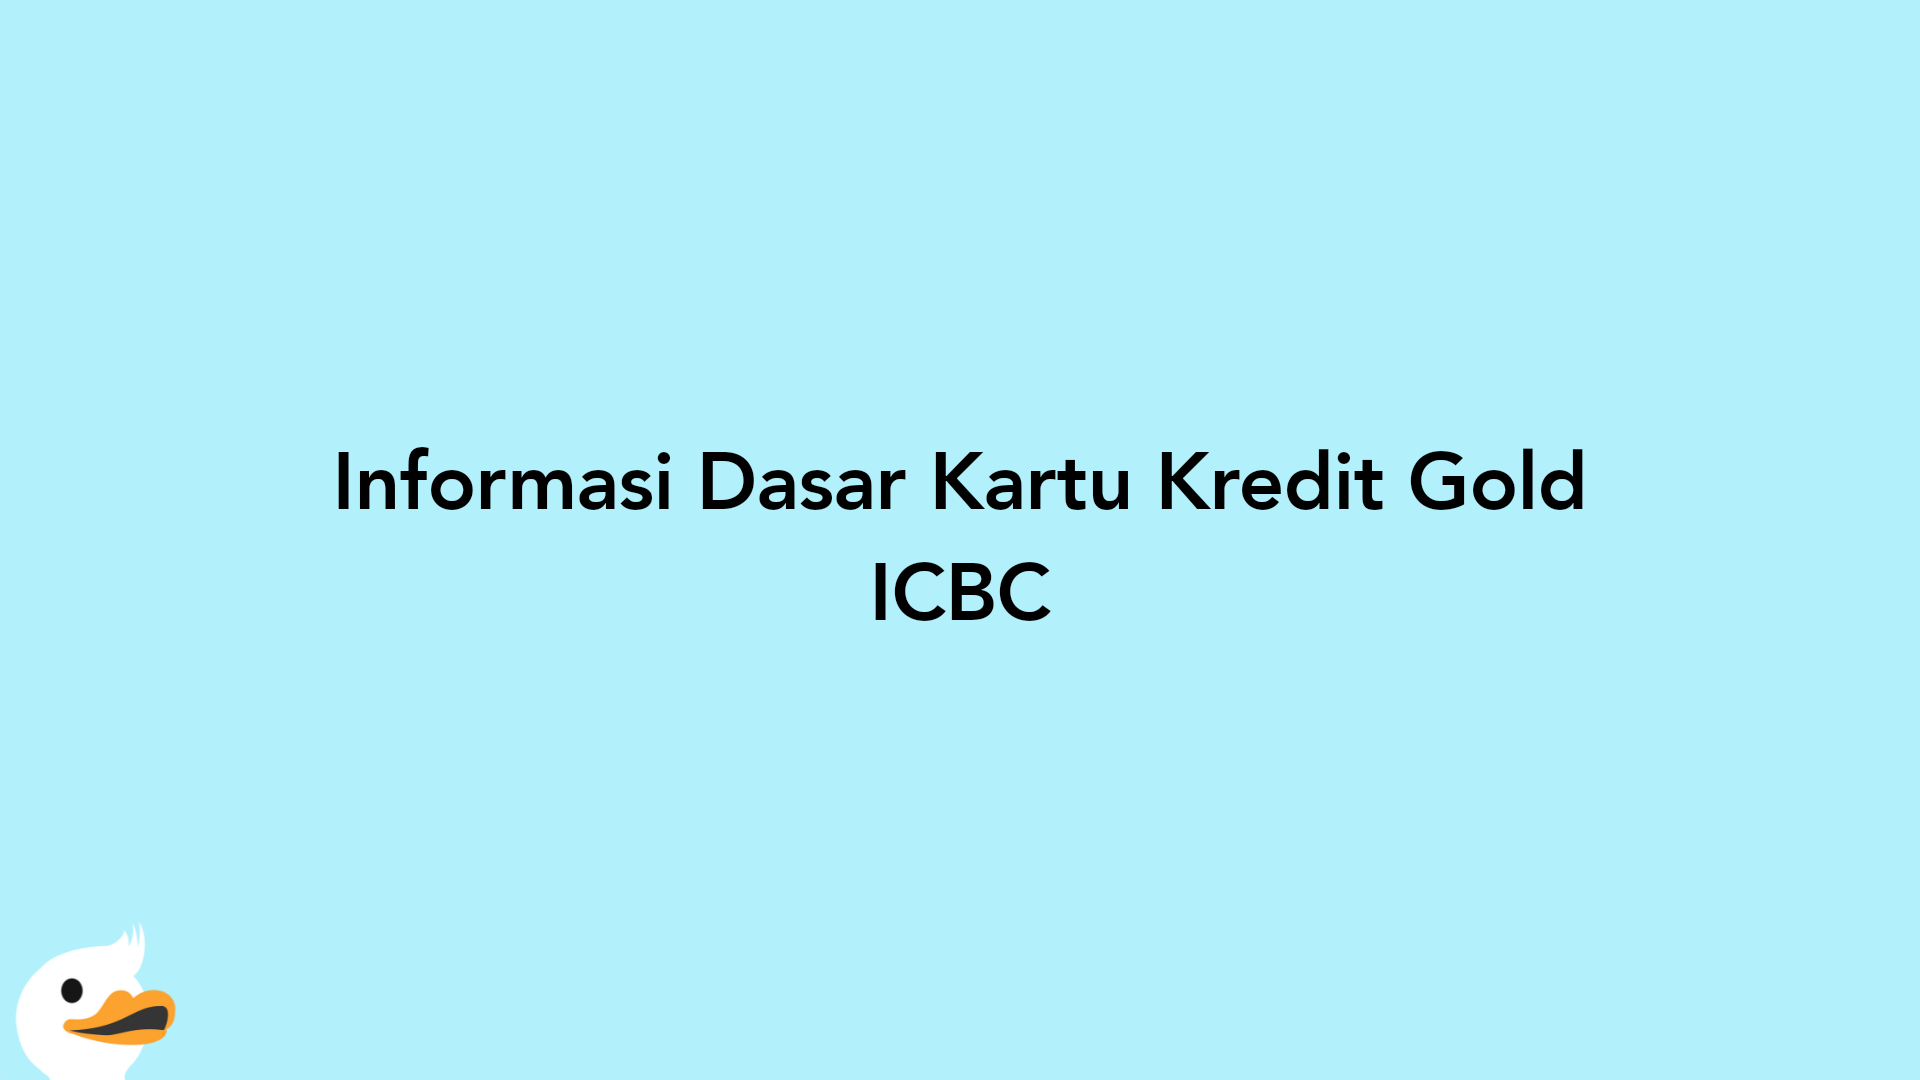 Informasi Dasar Kartu Kredit Gold ICBC